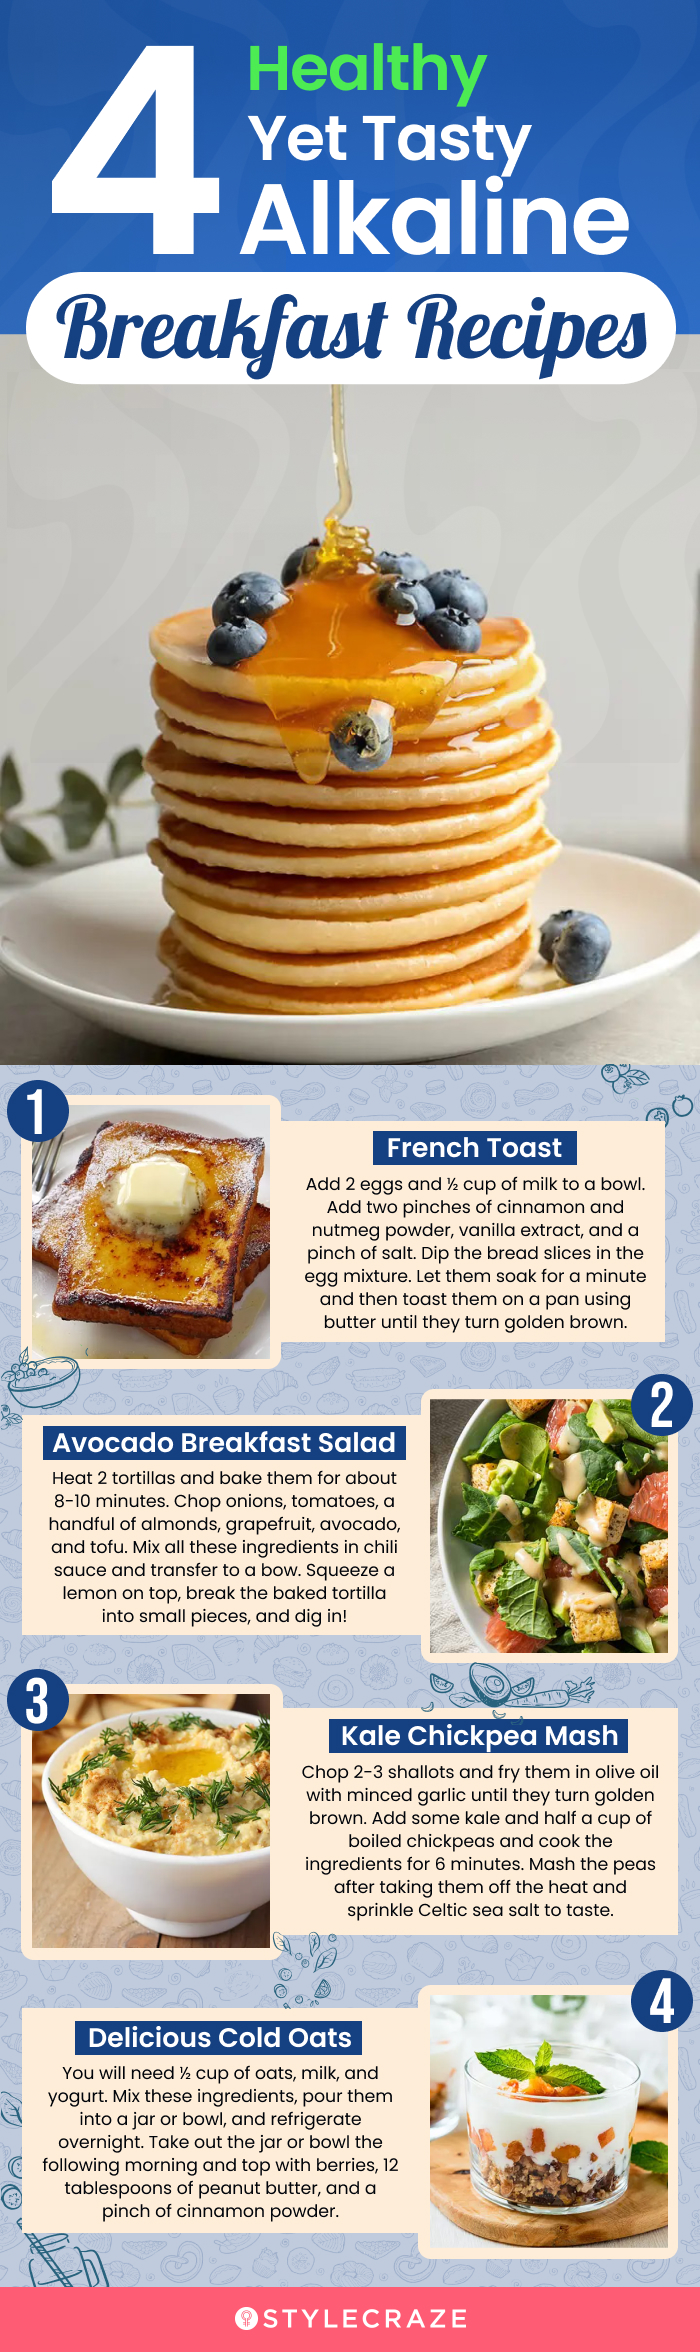 4 healthy yet tasty alkaline breakfast recipes (infographic)